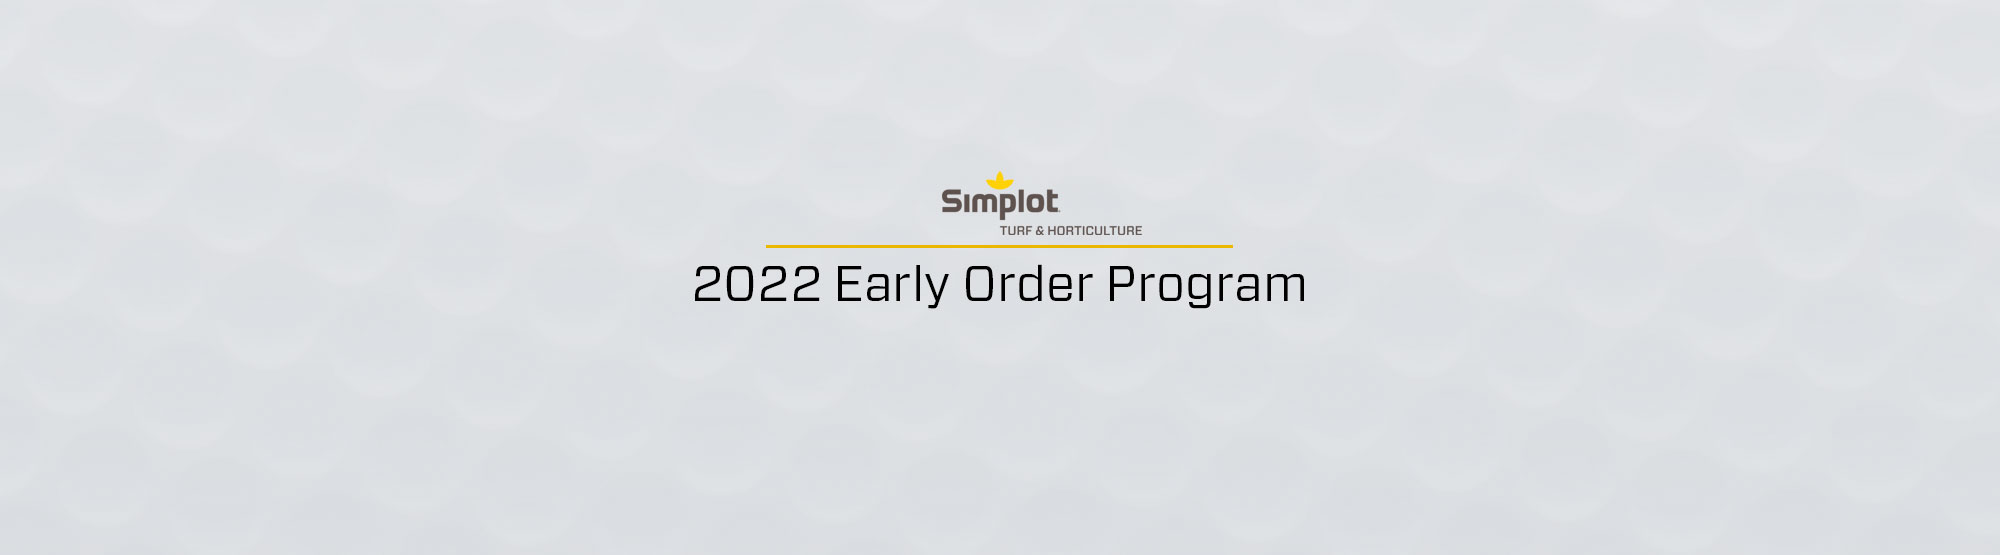 Early Order Program 2022 Carousel Image